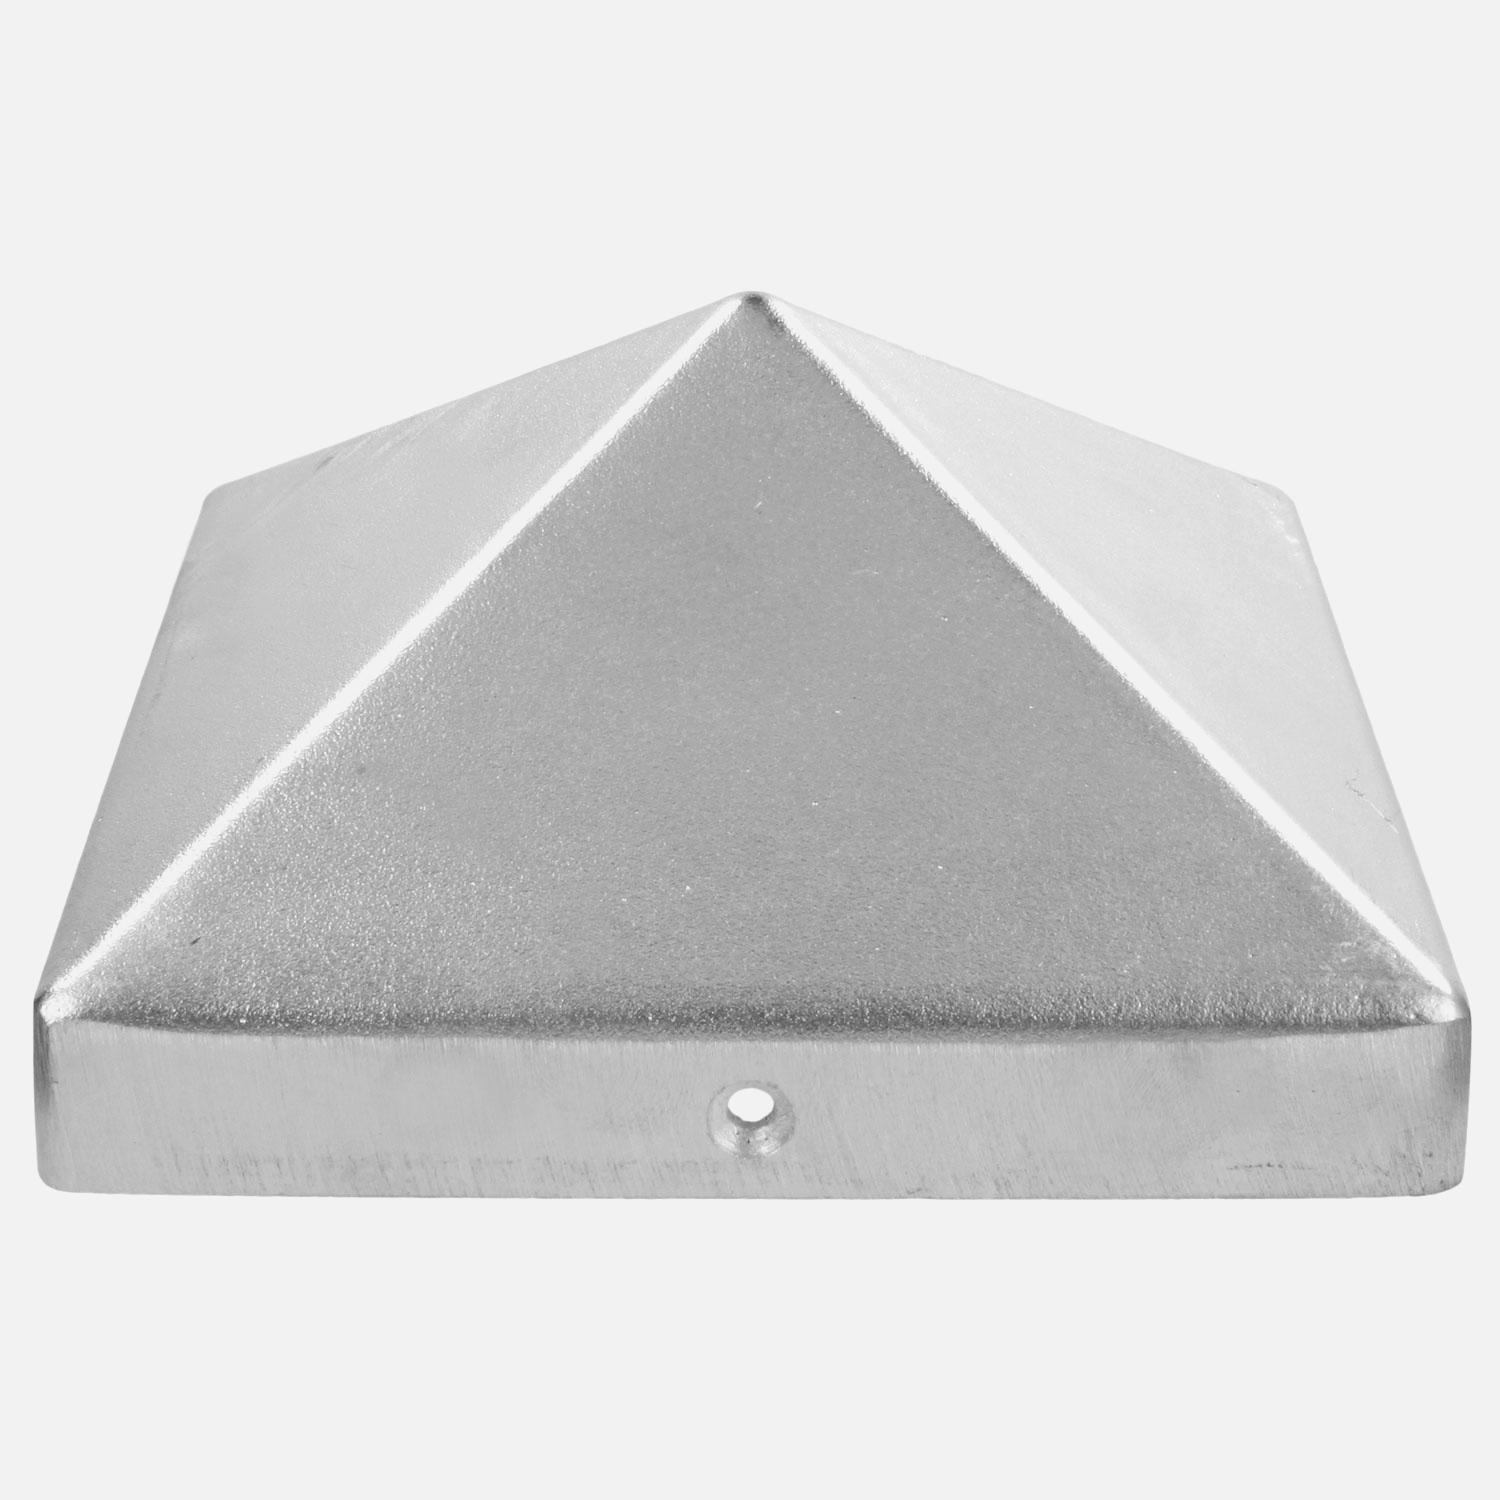 1 Alberts Pfostenkappe hohe Form Aluminiumguss blank 121x121 mm